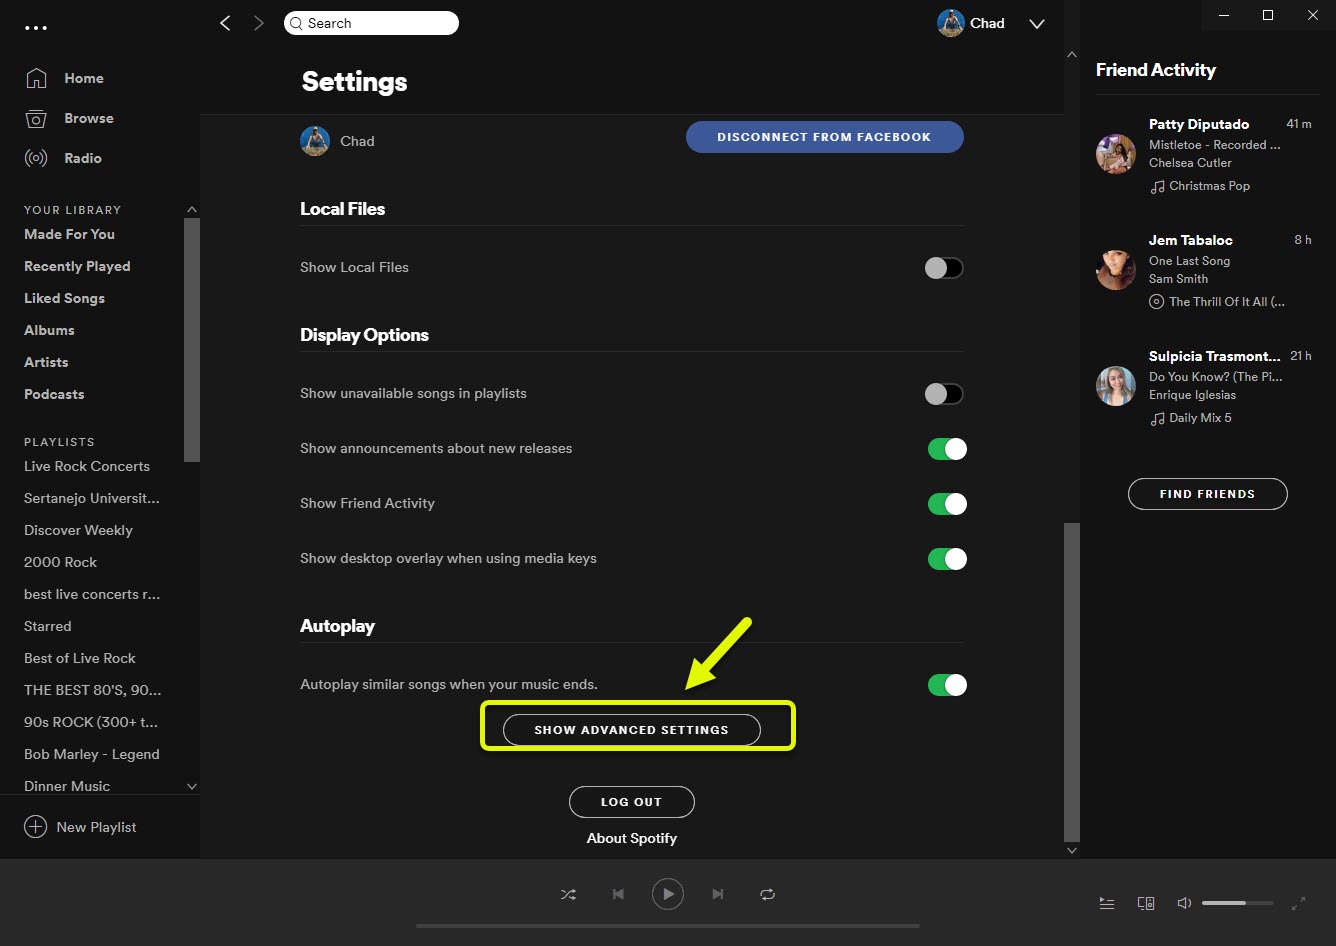 click show advanced settings